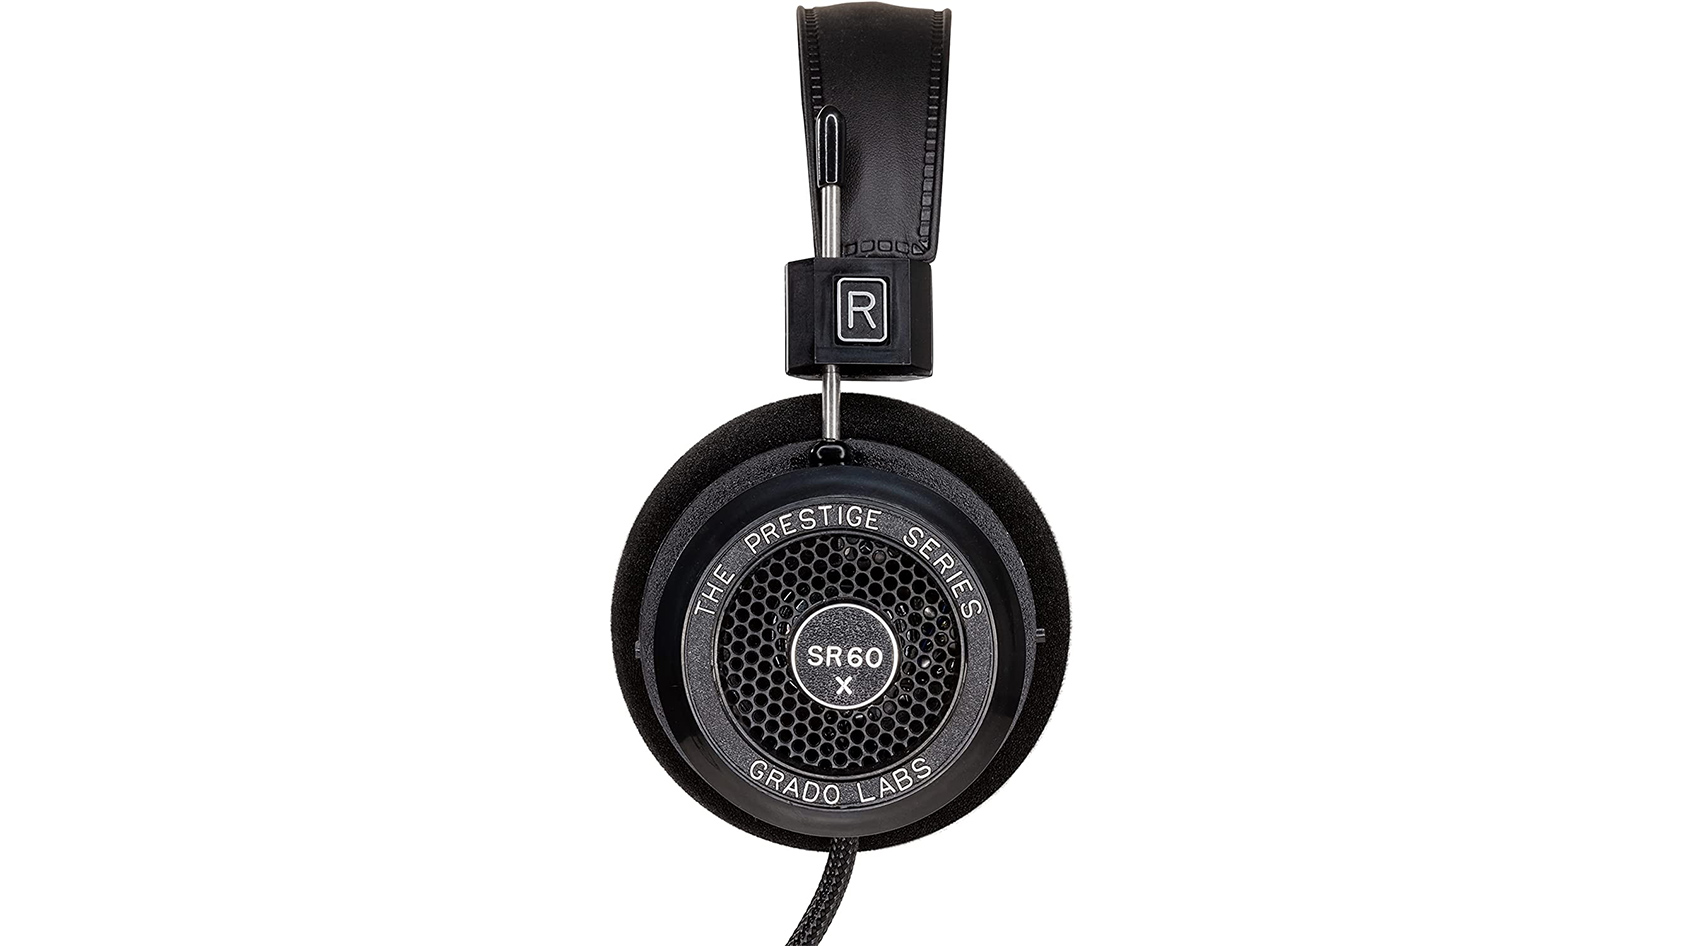 Grado SR60x open back headphones in black against a white background.